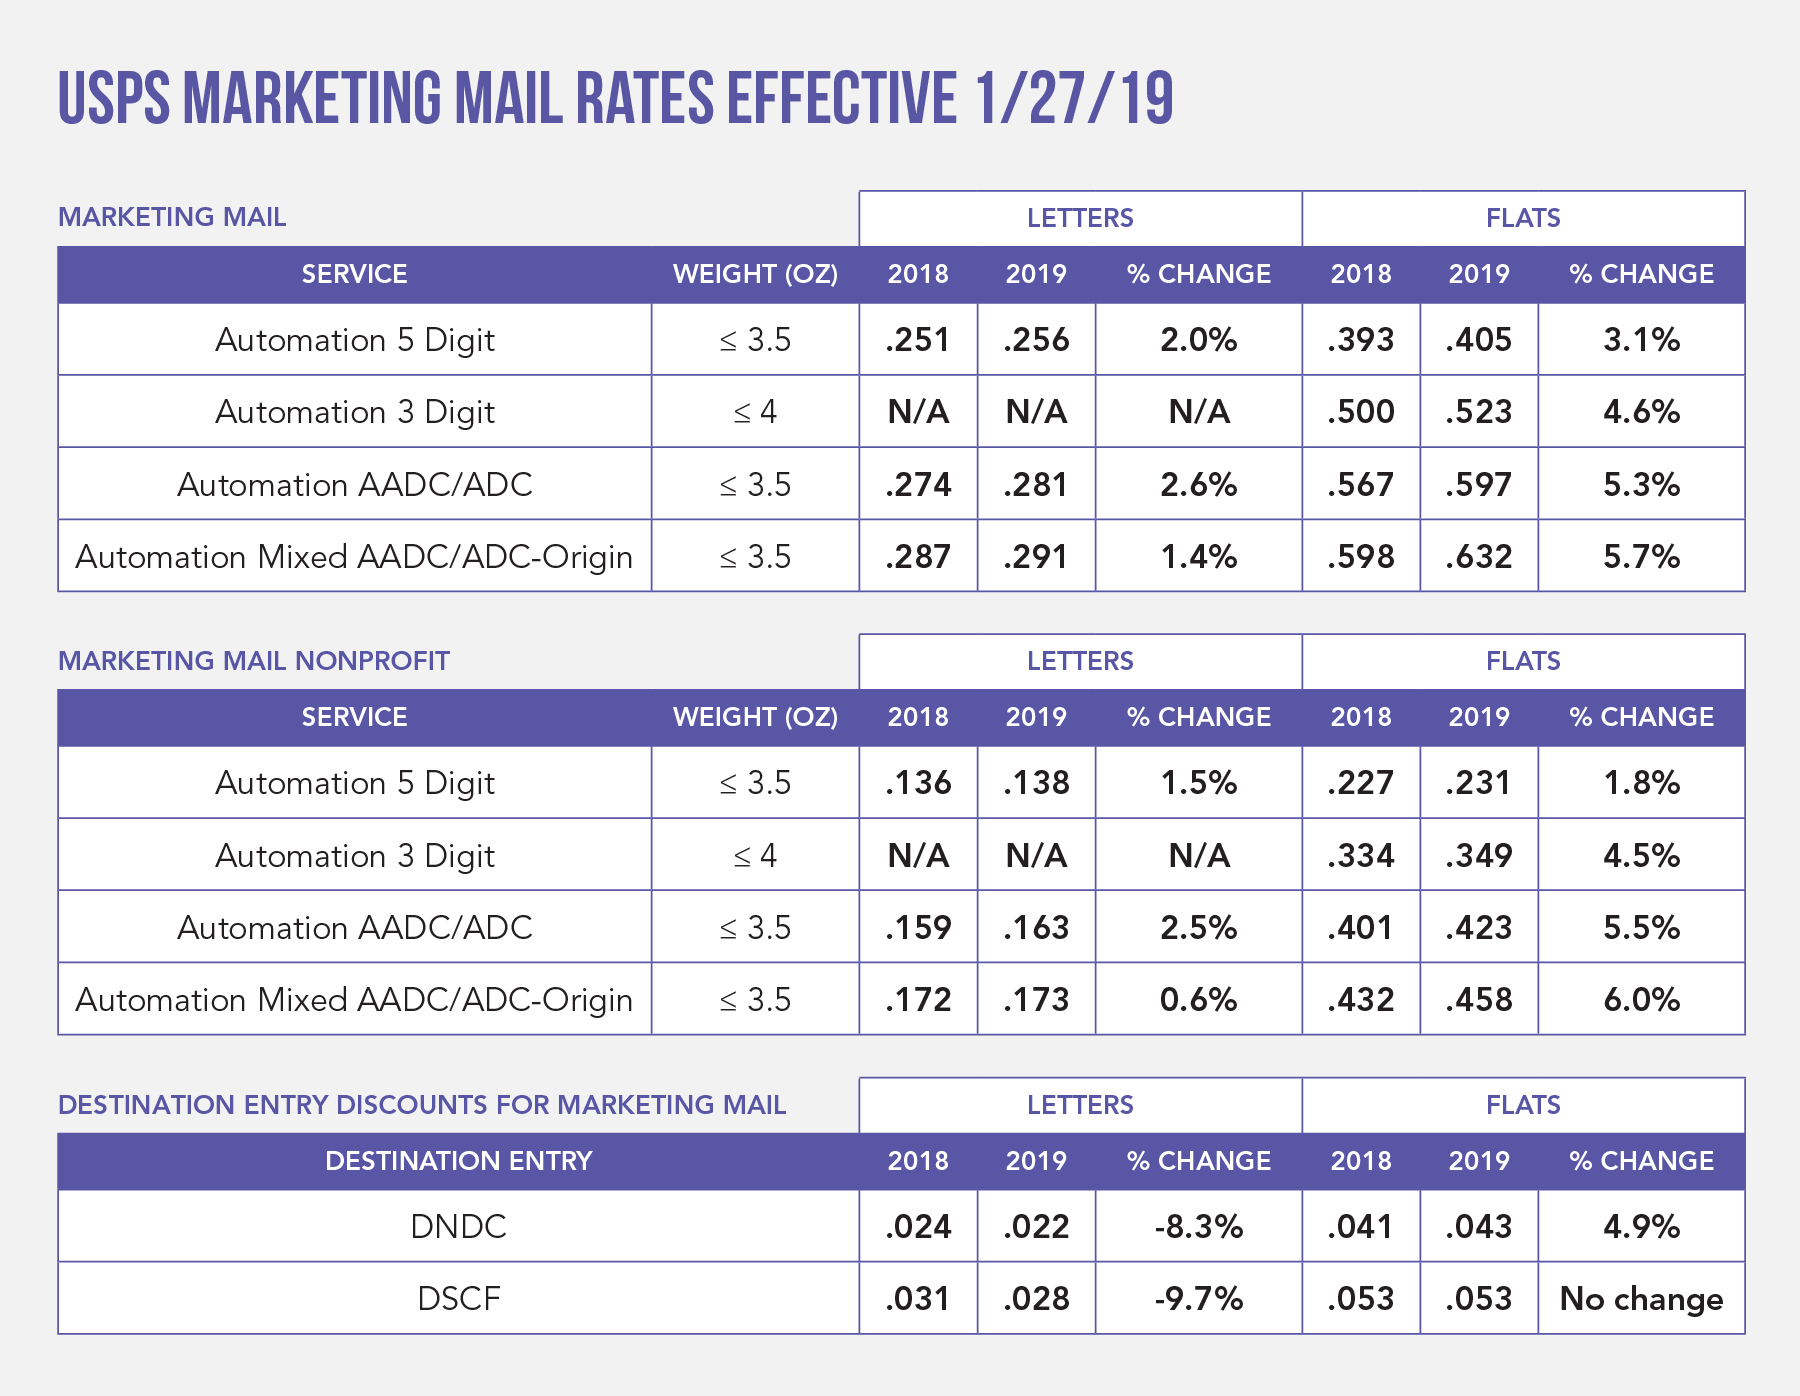 USPS Marketing Mail Rates Effective January 27, 2019